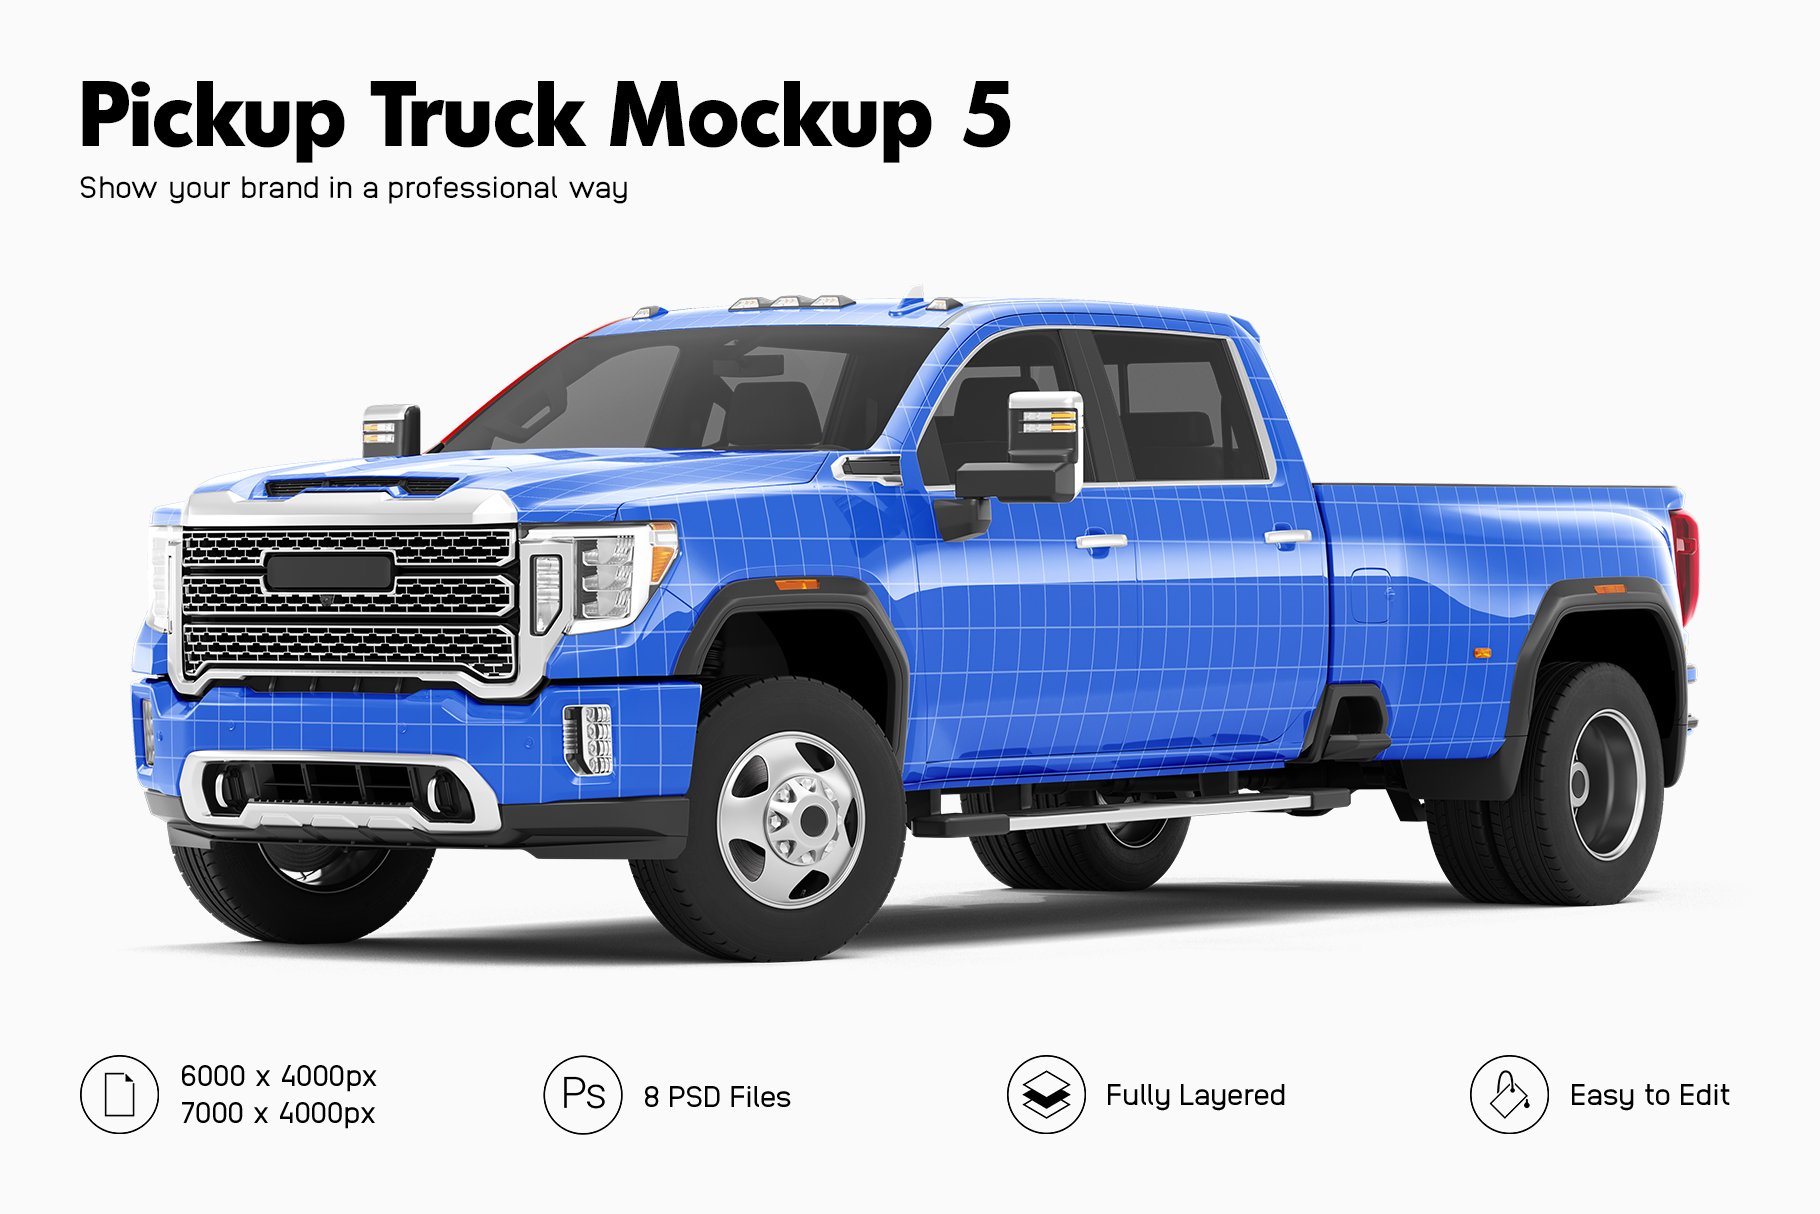 Pickup Truck Mockup 5 cover image.